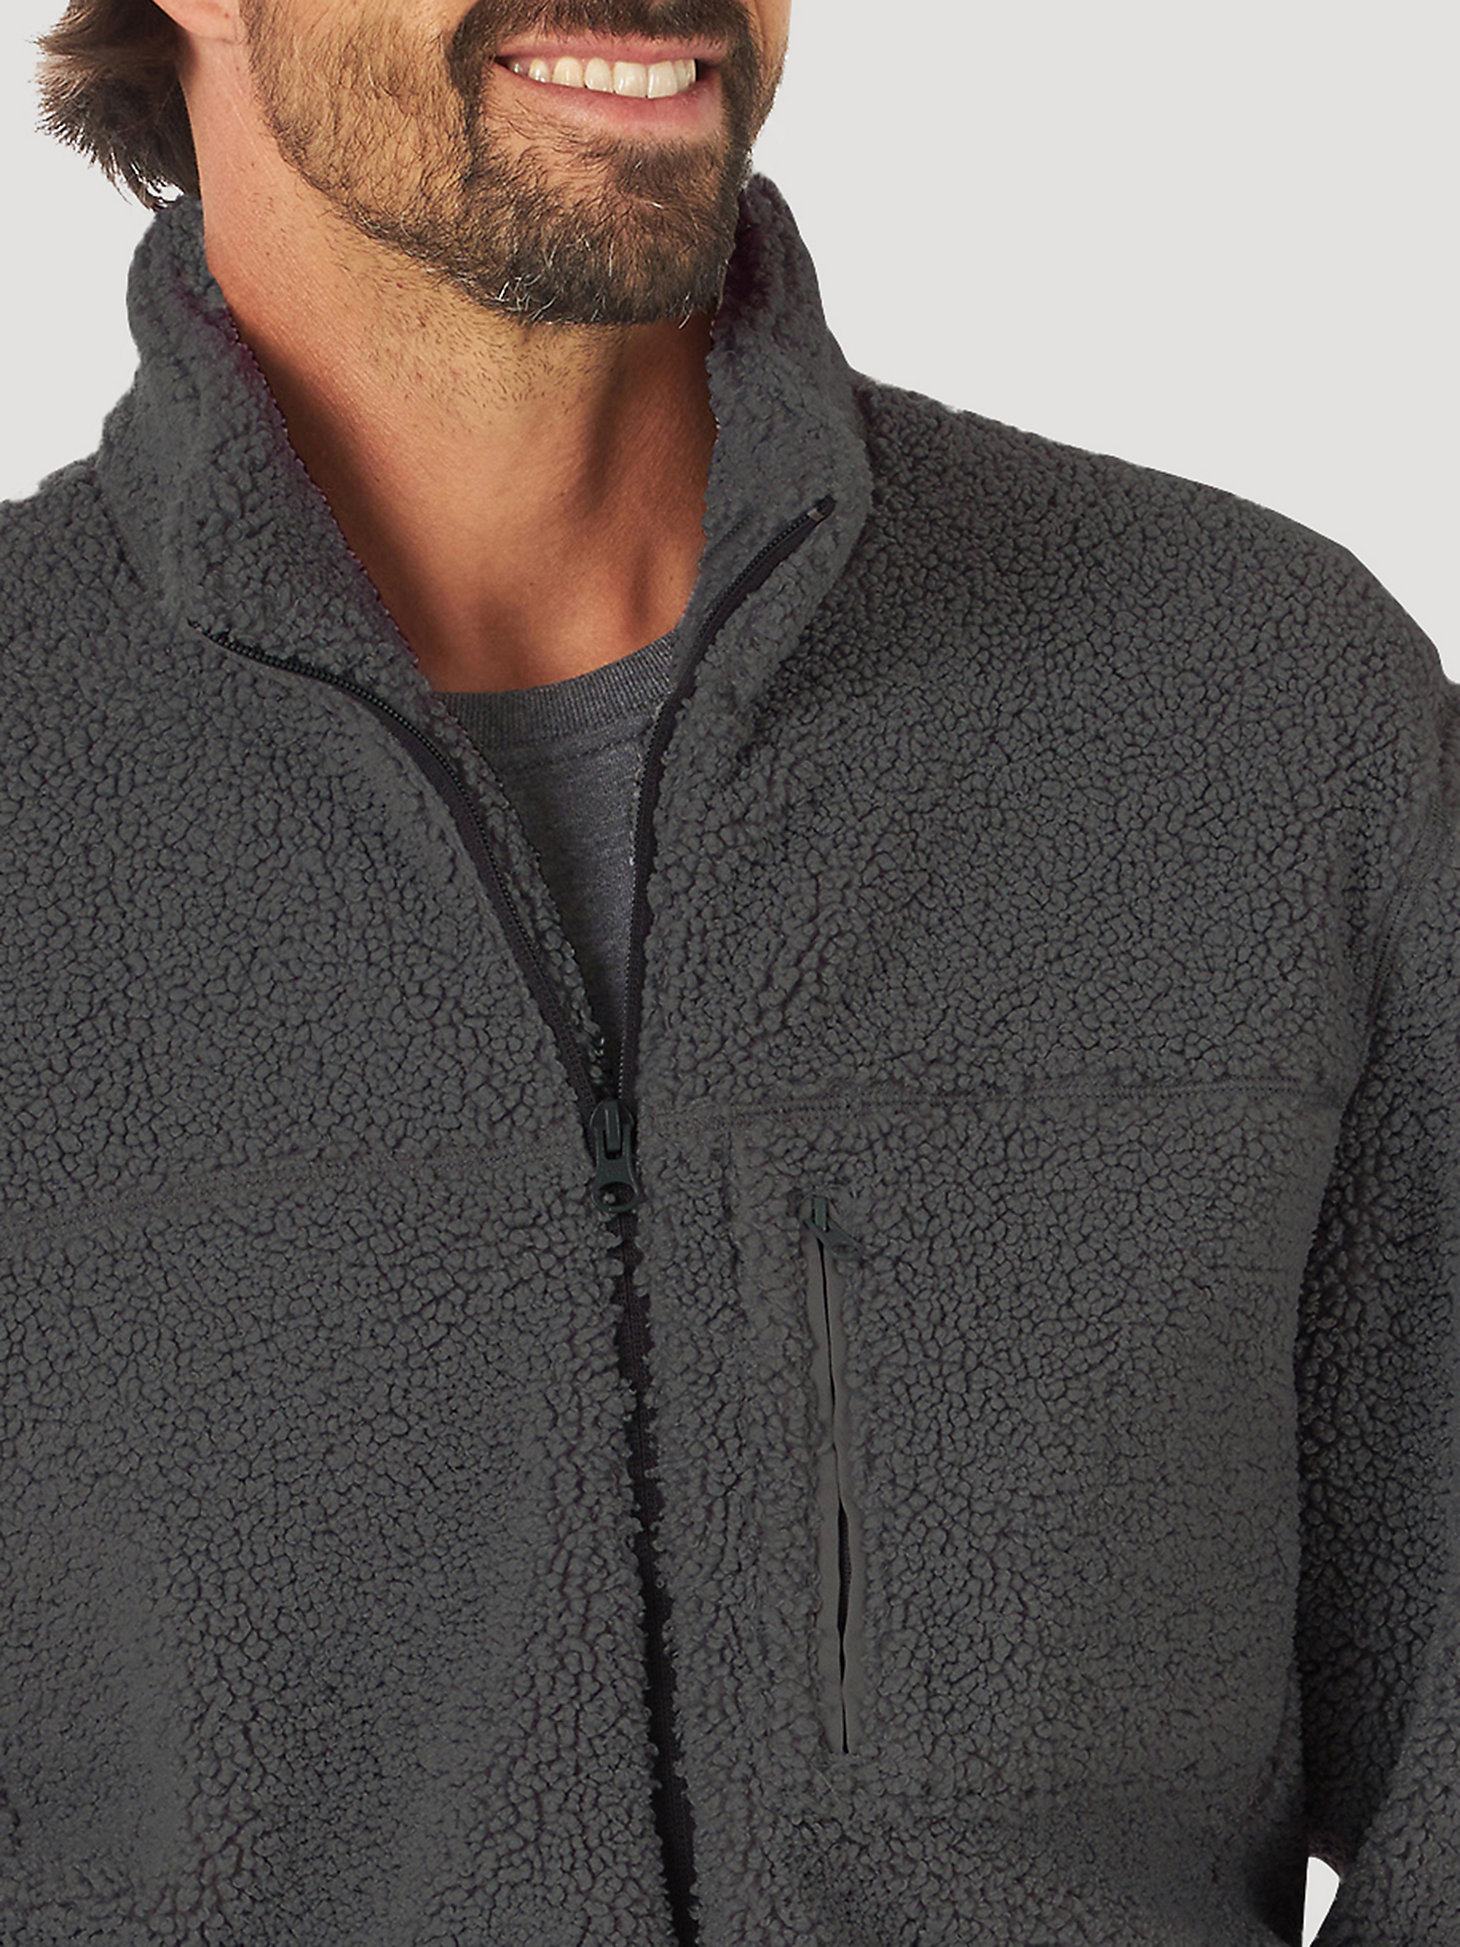 Men's Wrangler Zip Front Multi Pocket Sherpa Jacket in Charcoal alternative view 1